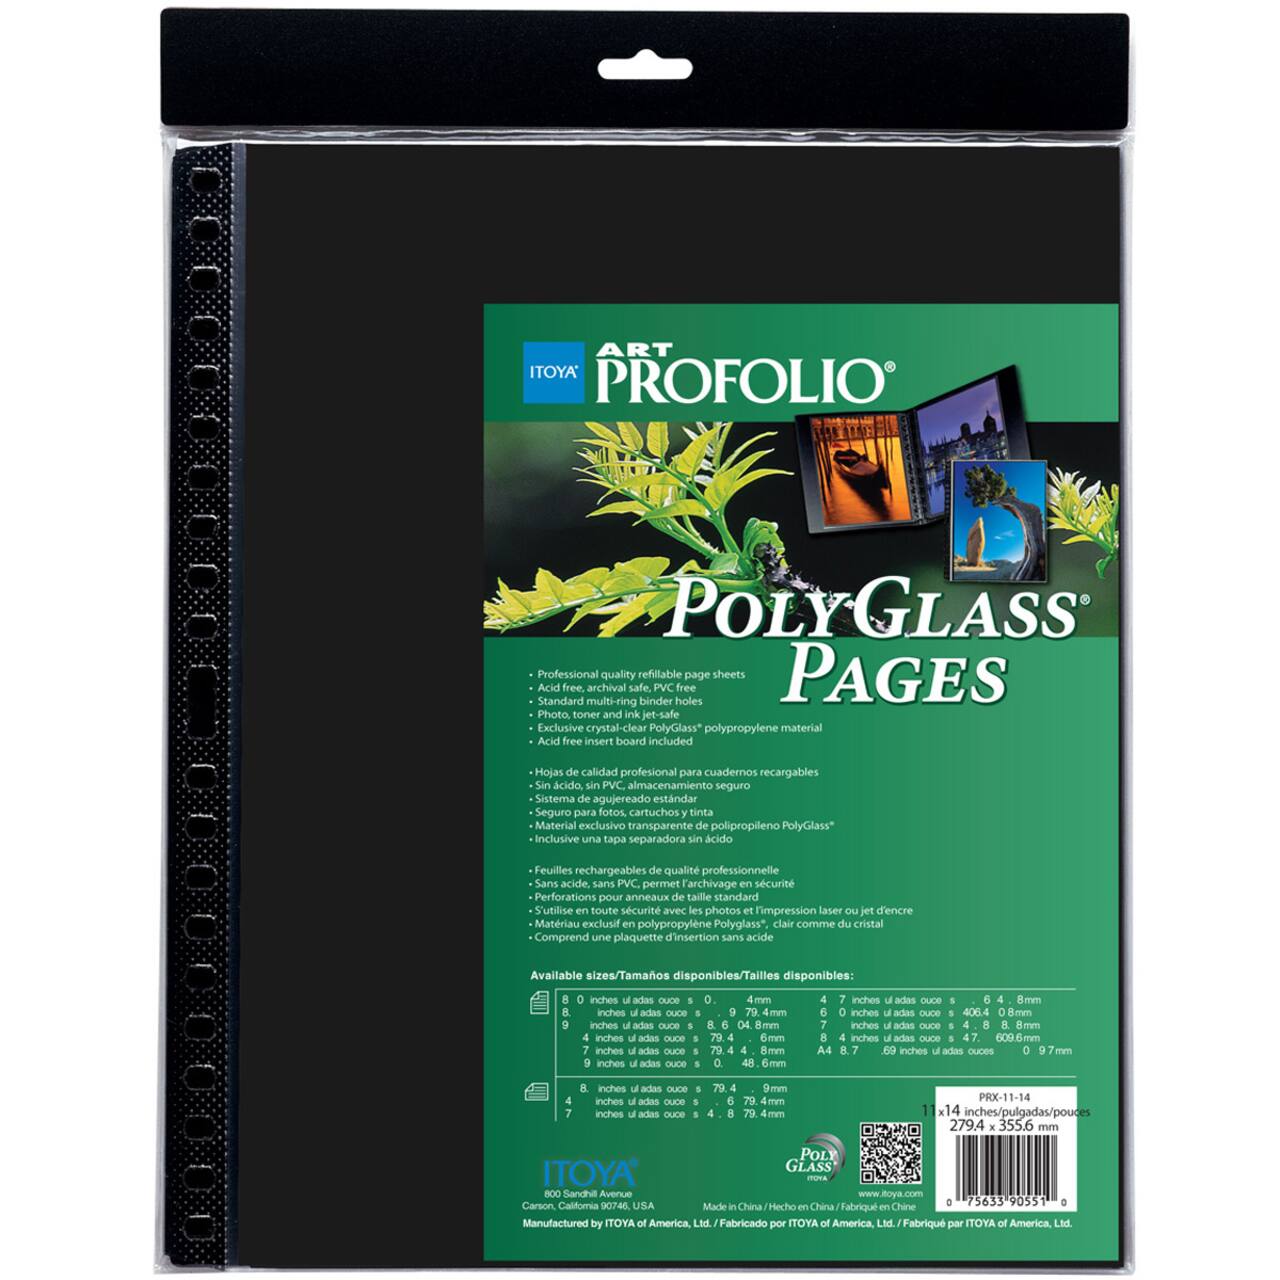 ITOYA® Art Profolio® PolyGlass® Pages